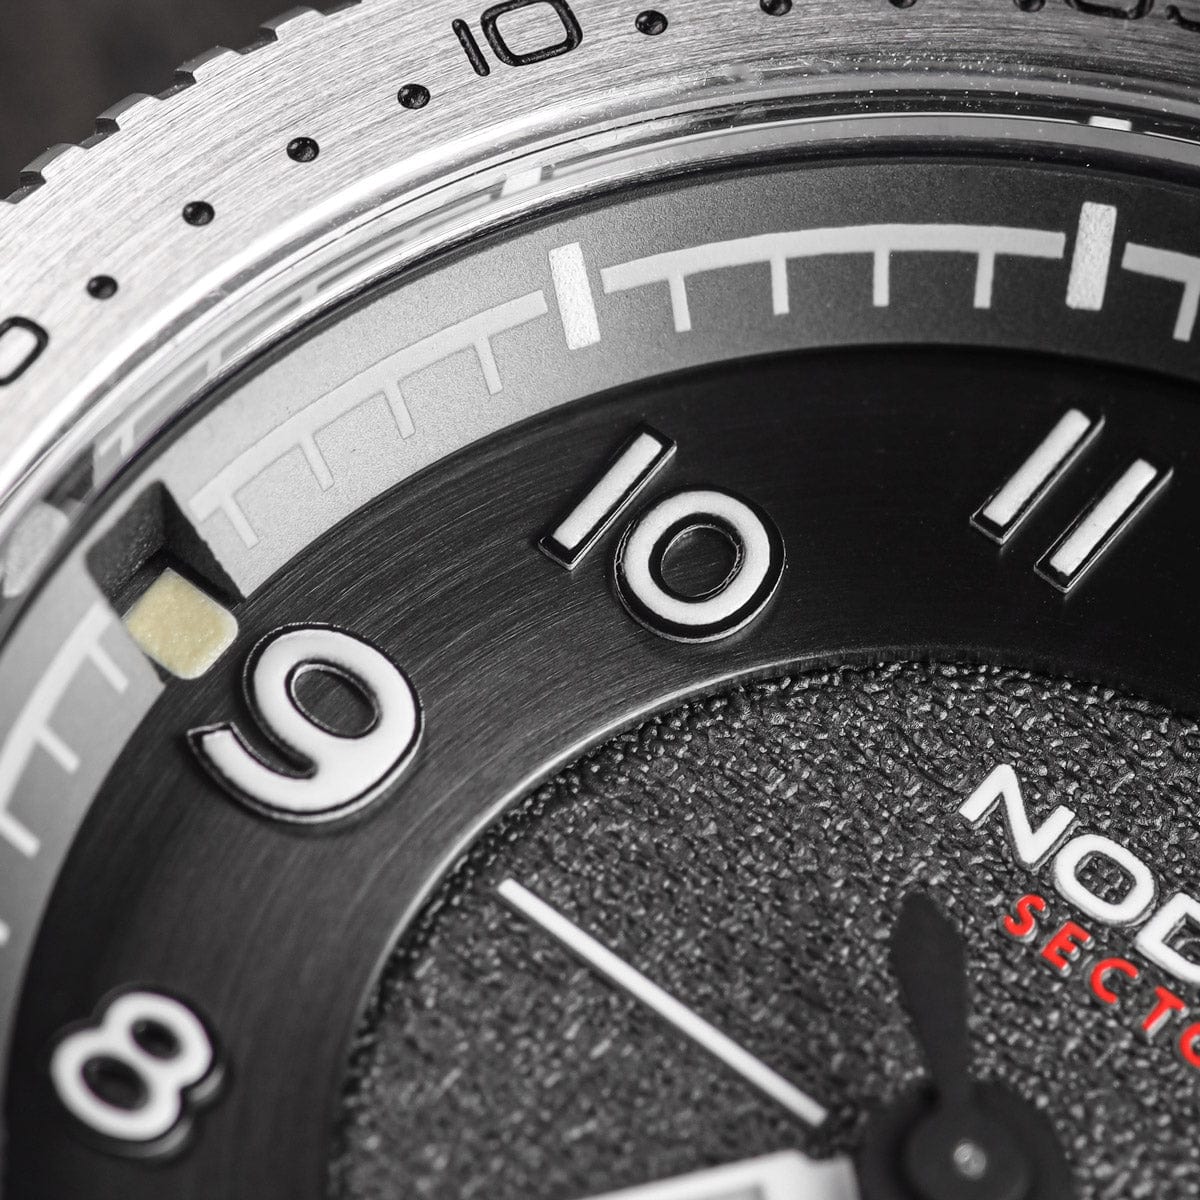 Nodus Sector Pilot Automatic Watch - Corsair Grey - DLC Bezel